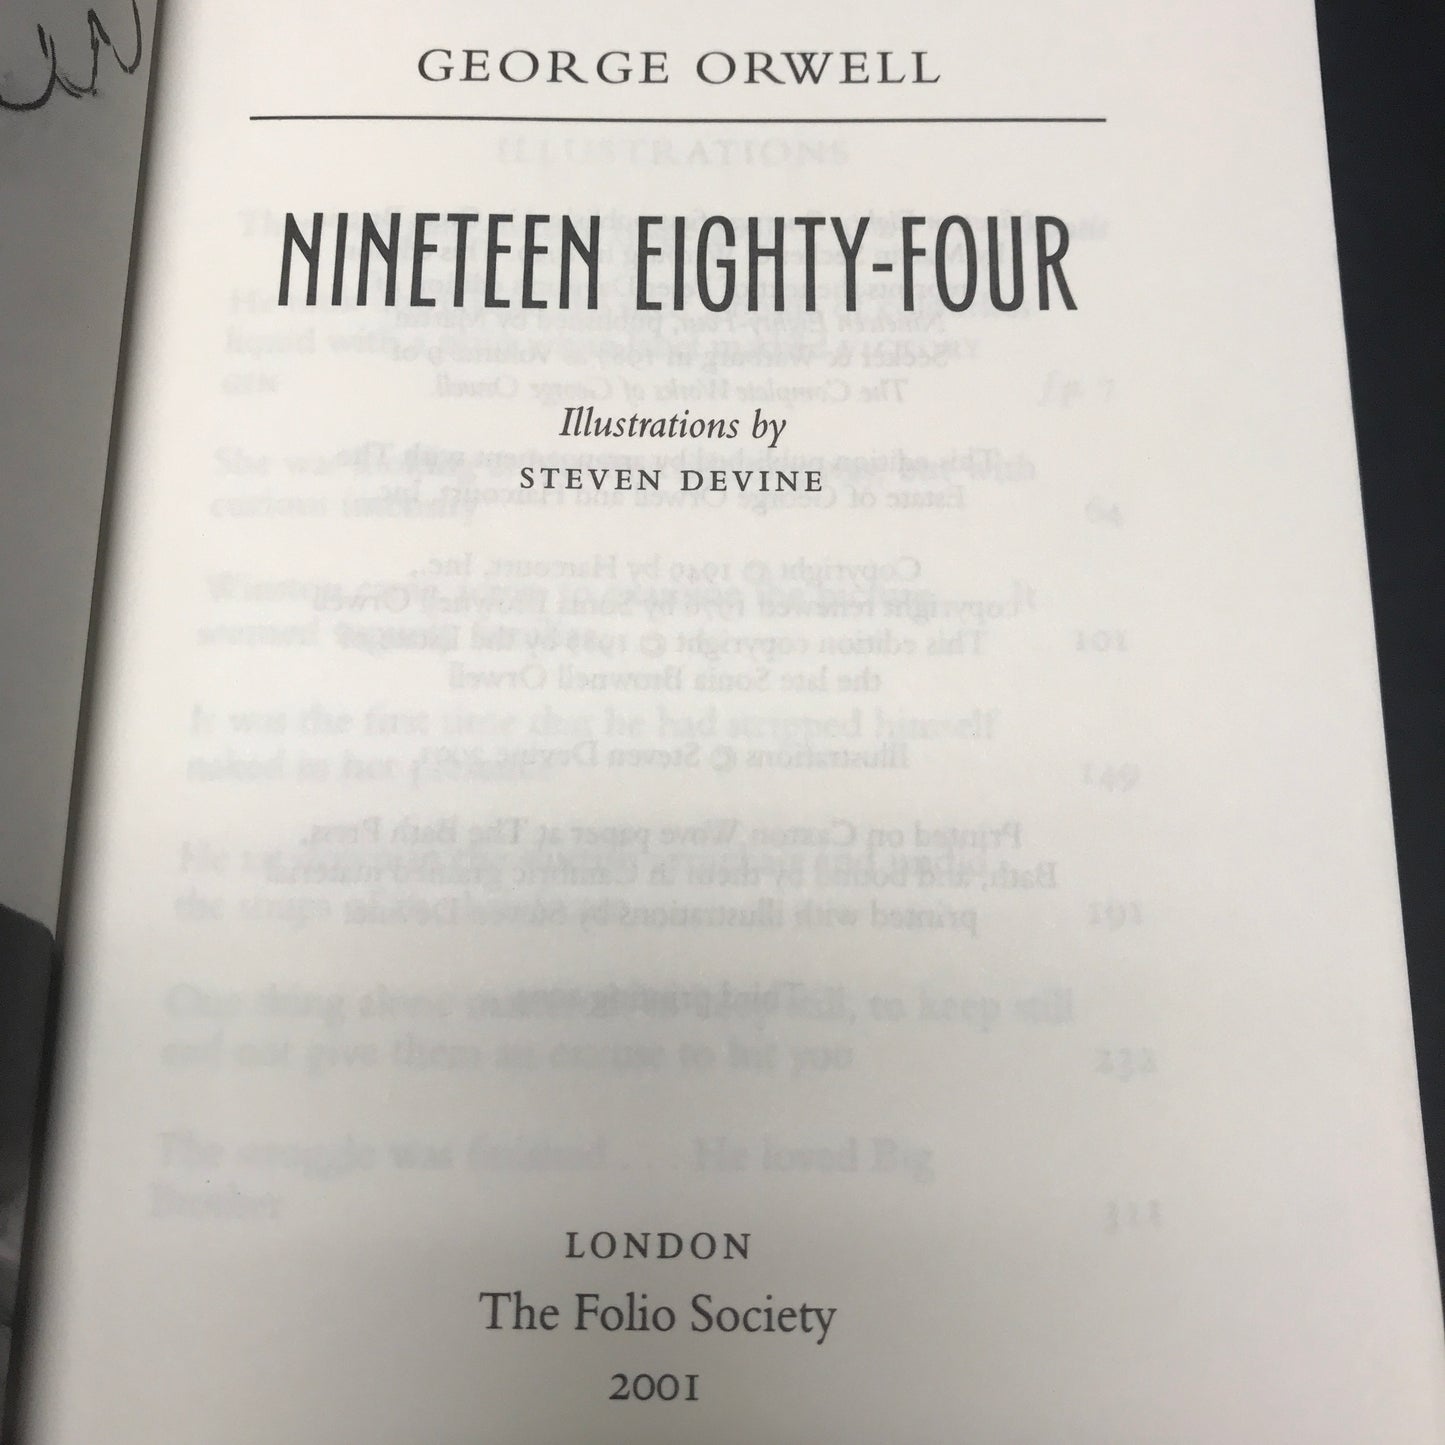 1984 - George Orwell - 3rd Printing - Folio Society - 2003